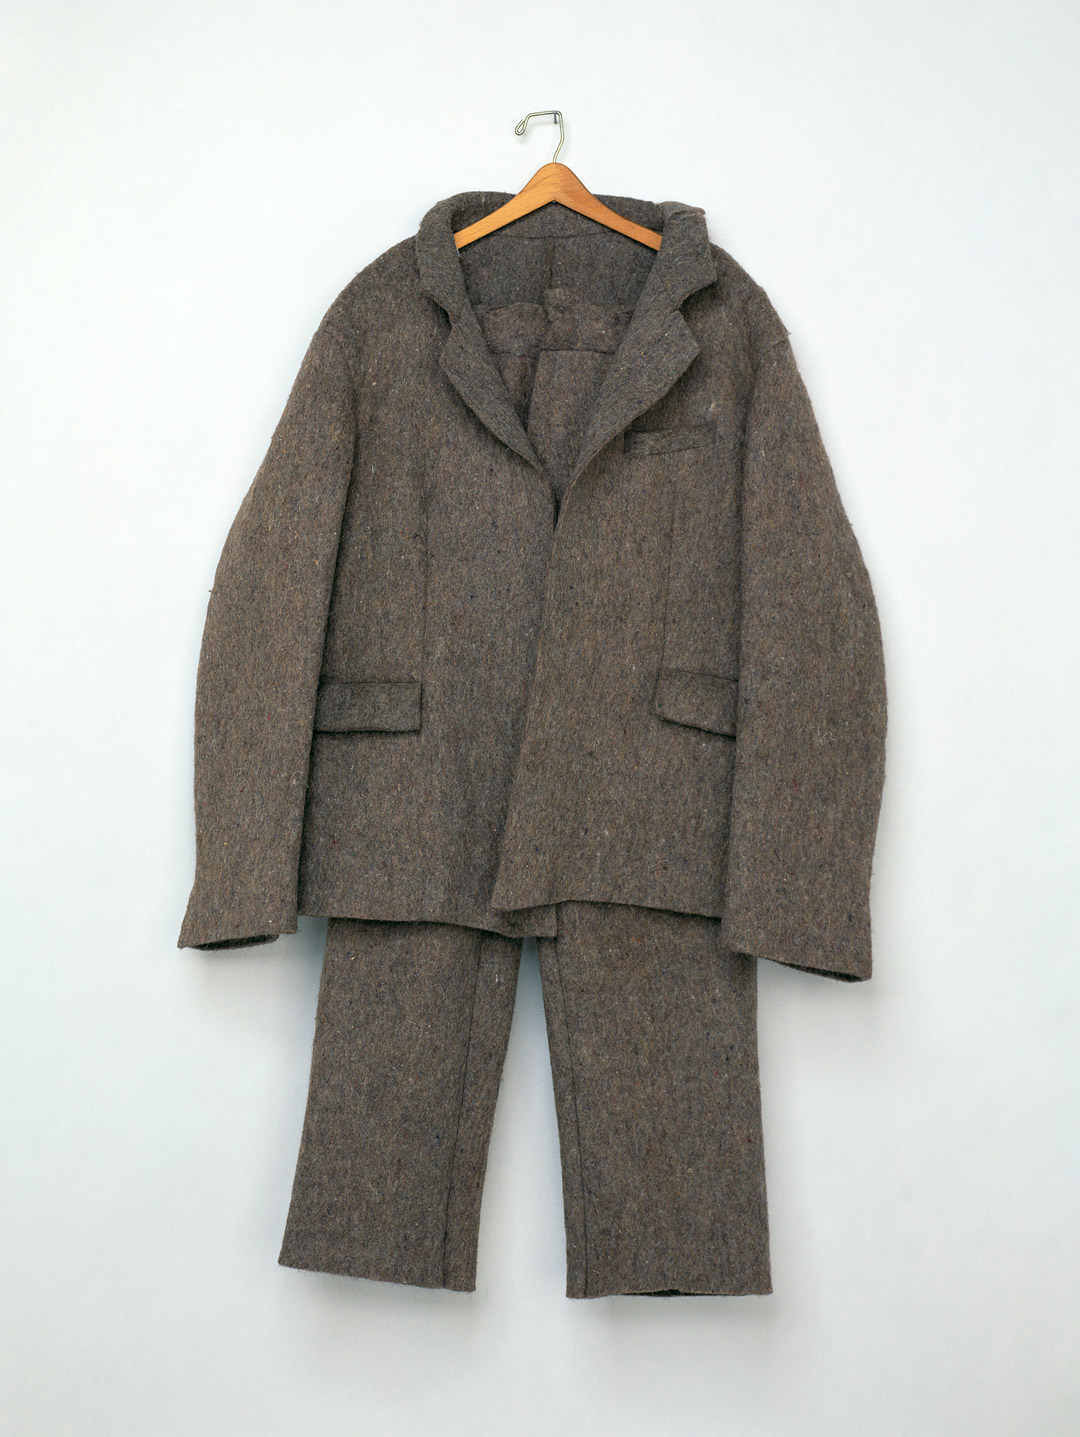 Felt Suit: The Fabric of Joseph Beuys’s Life